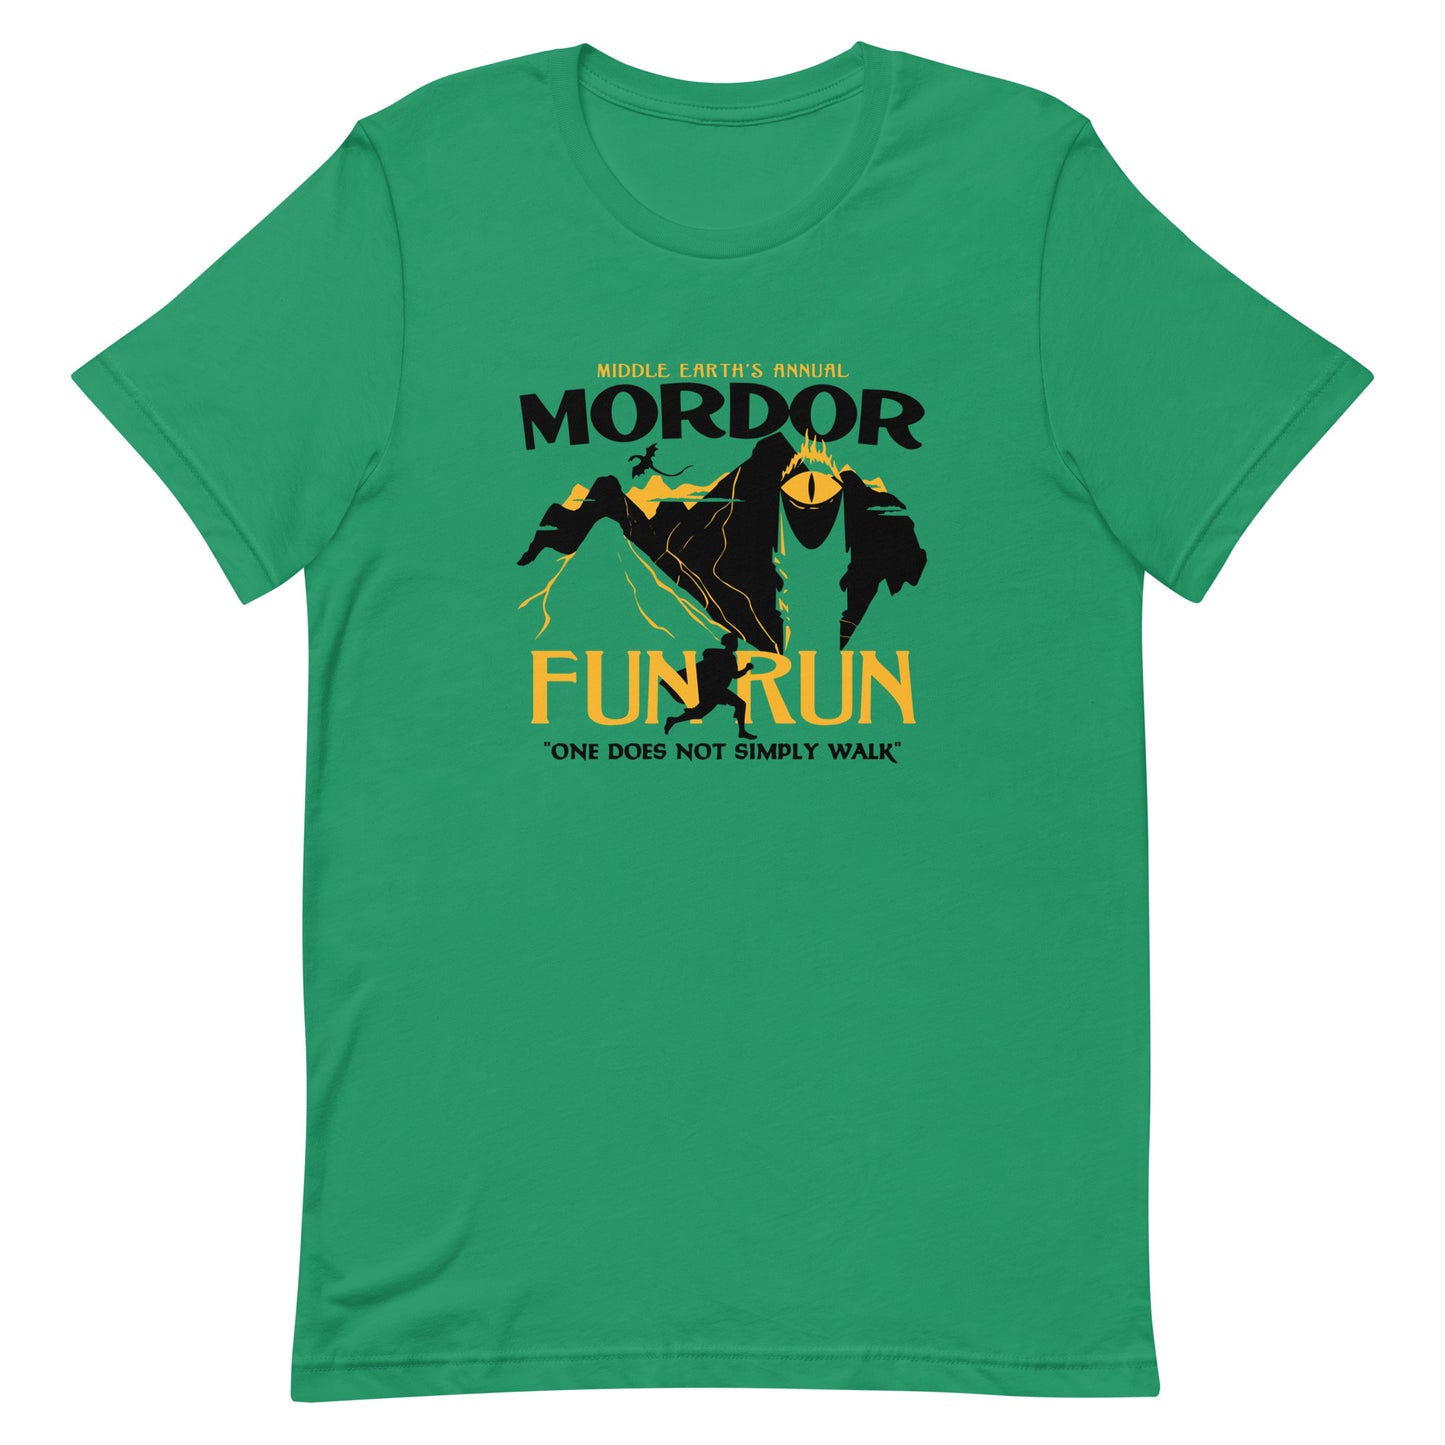 Mordor Fun Run Men's Signature Tee